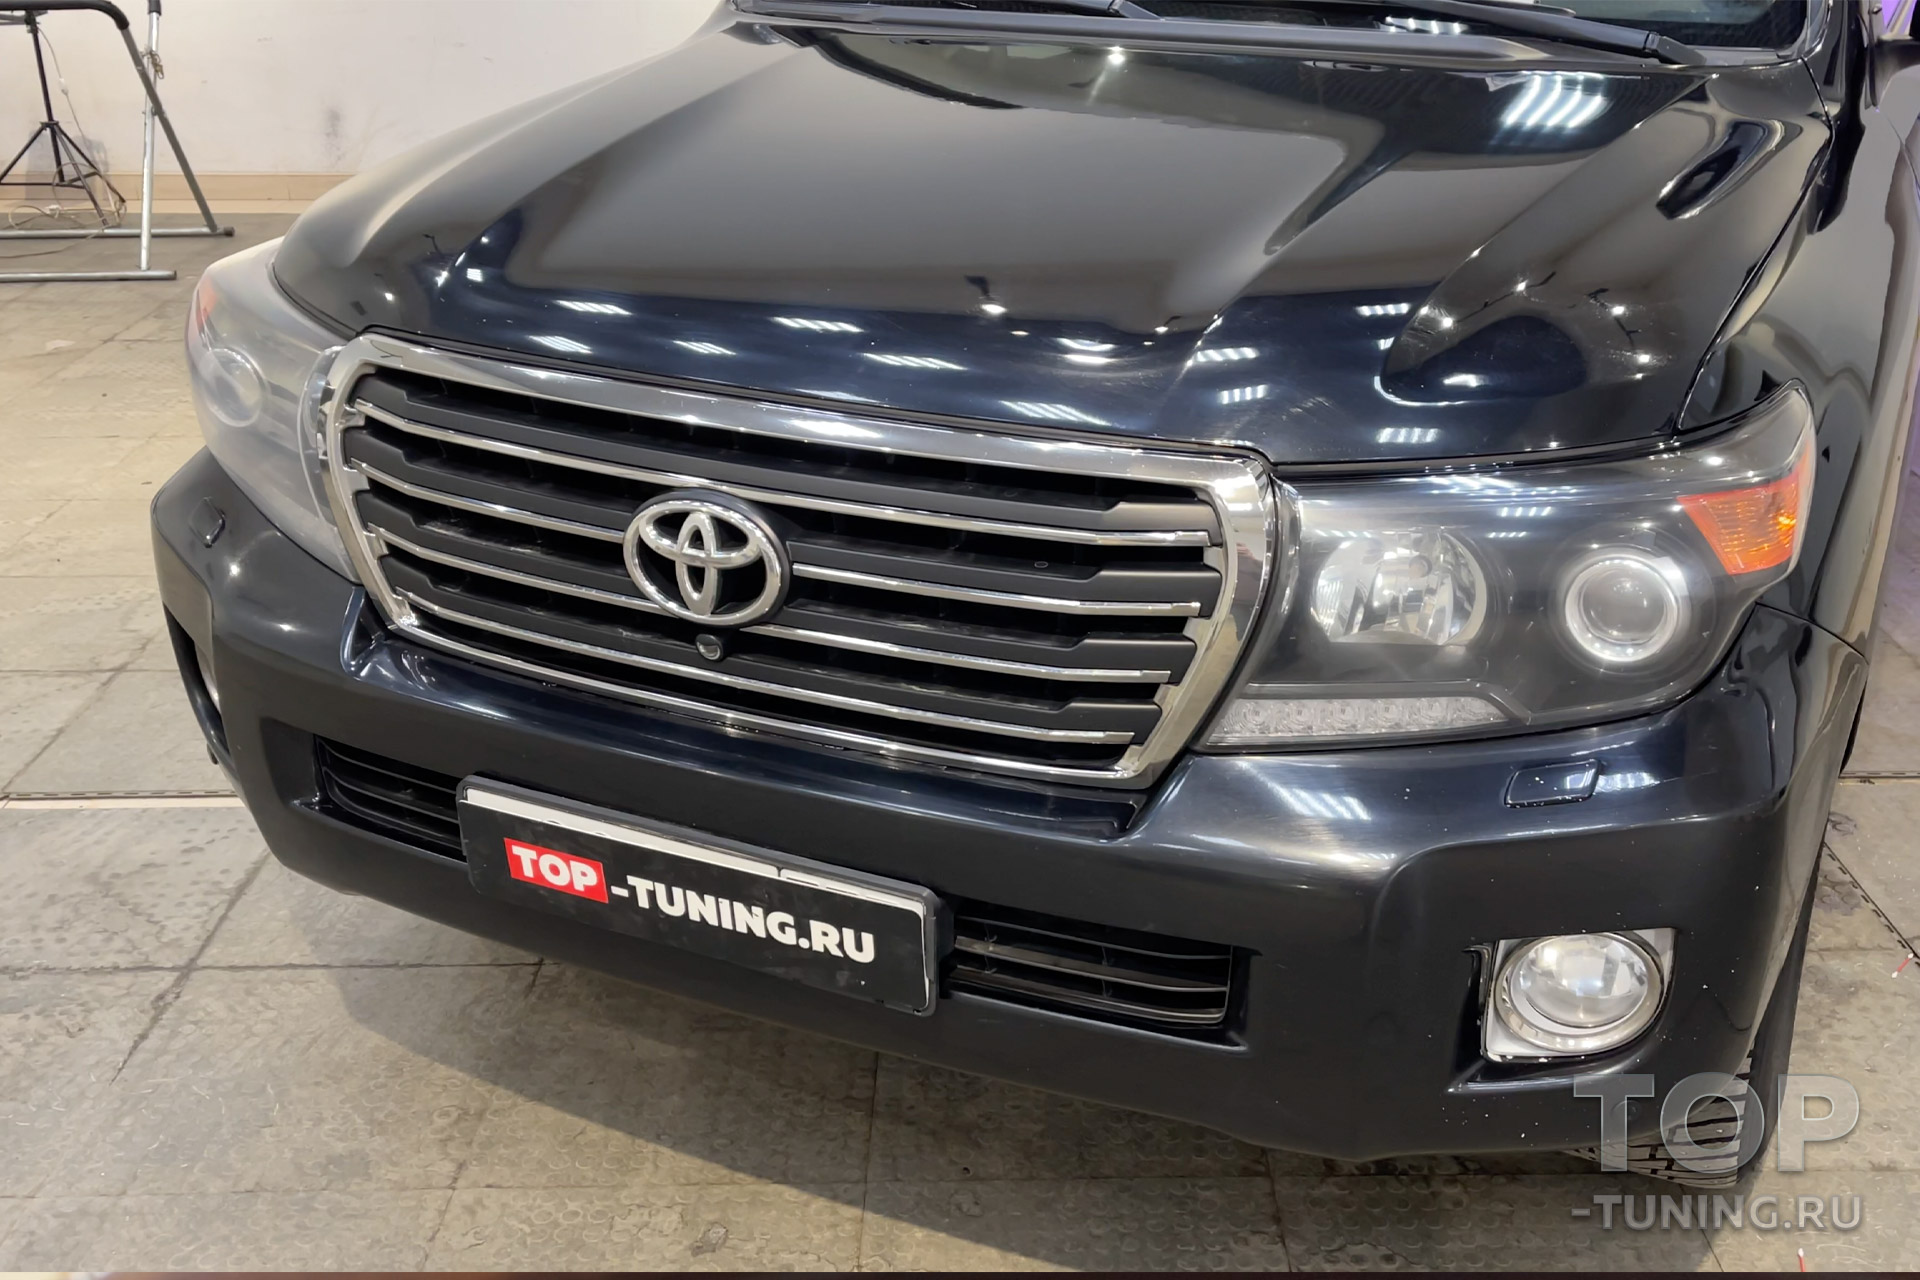 Модернизация внешности Toyota Land Cruiser 200 Brownstone 2014